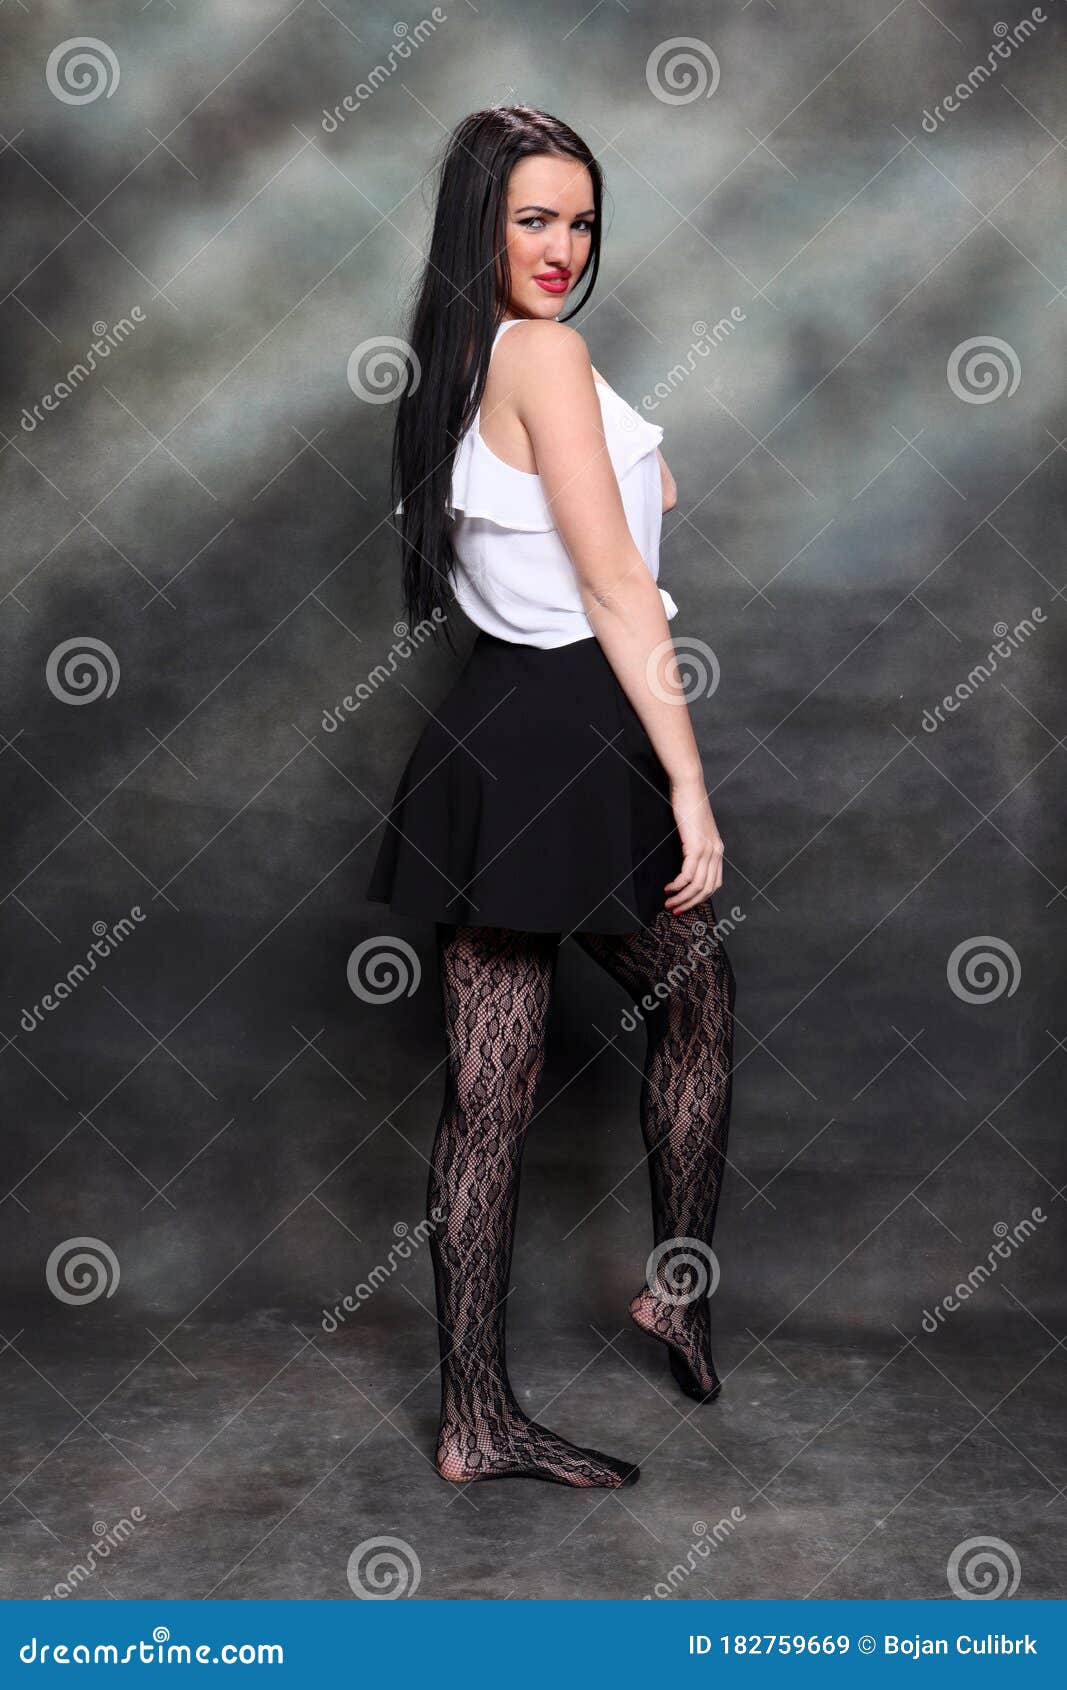 https://thumbs.dreamstime.com/z/beautiful-european-girl-long-black-hair-posing-studio-canvas-background-style-trends-fashion-concept-182759669.jpg